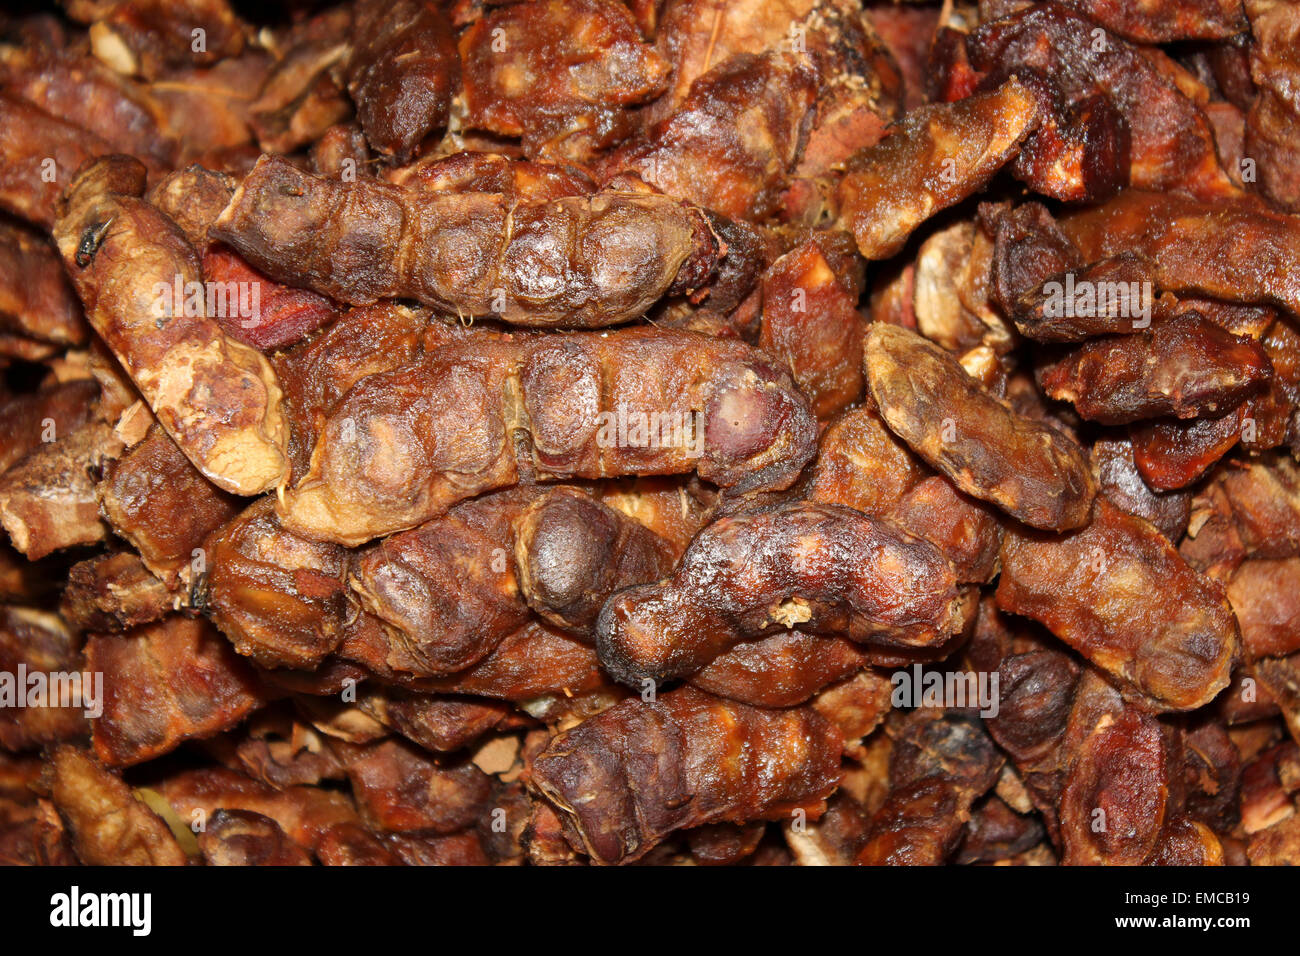 Sticky Edible Pulp Of Tamarind Fruit Tamarindus indica Stock Photo